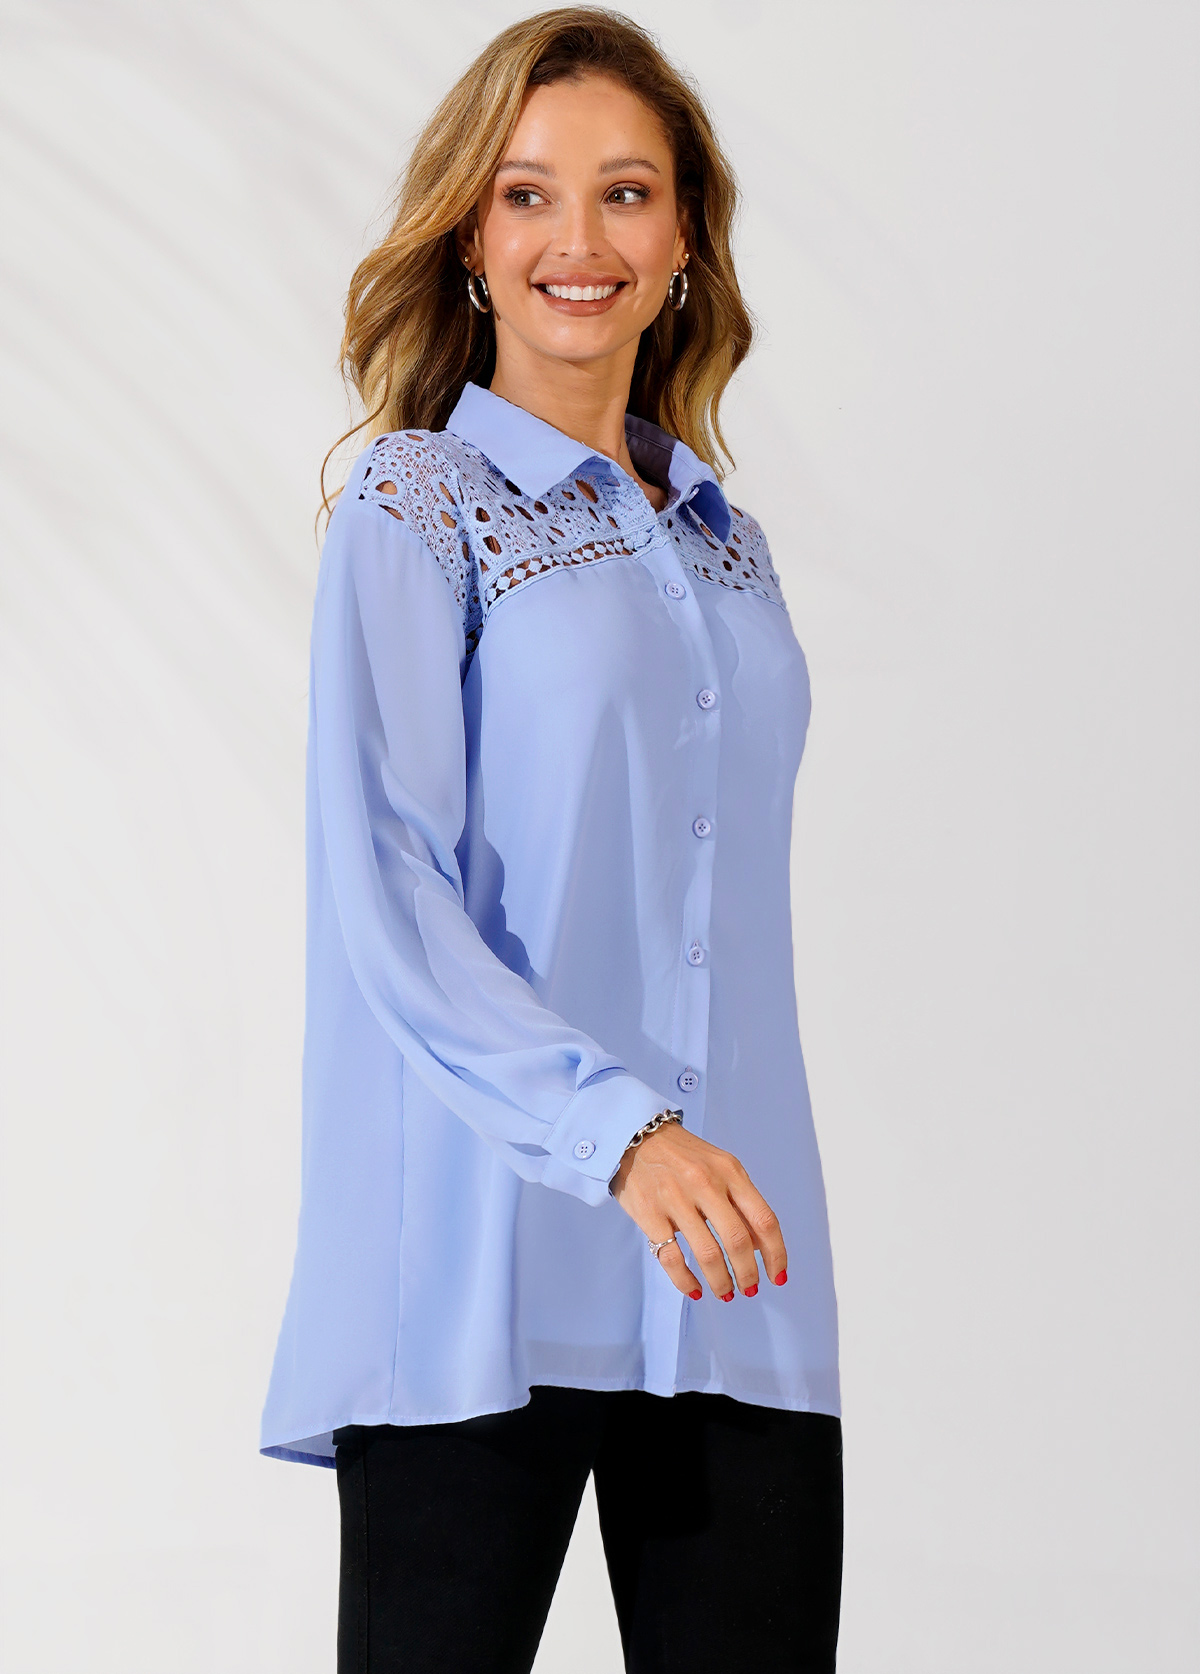 Lace Trim Turndown Collar Long Sleeve Blue Blouse